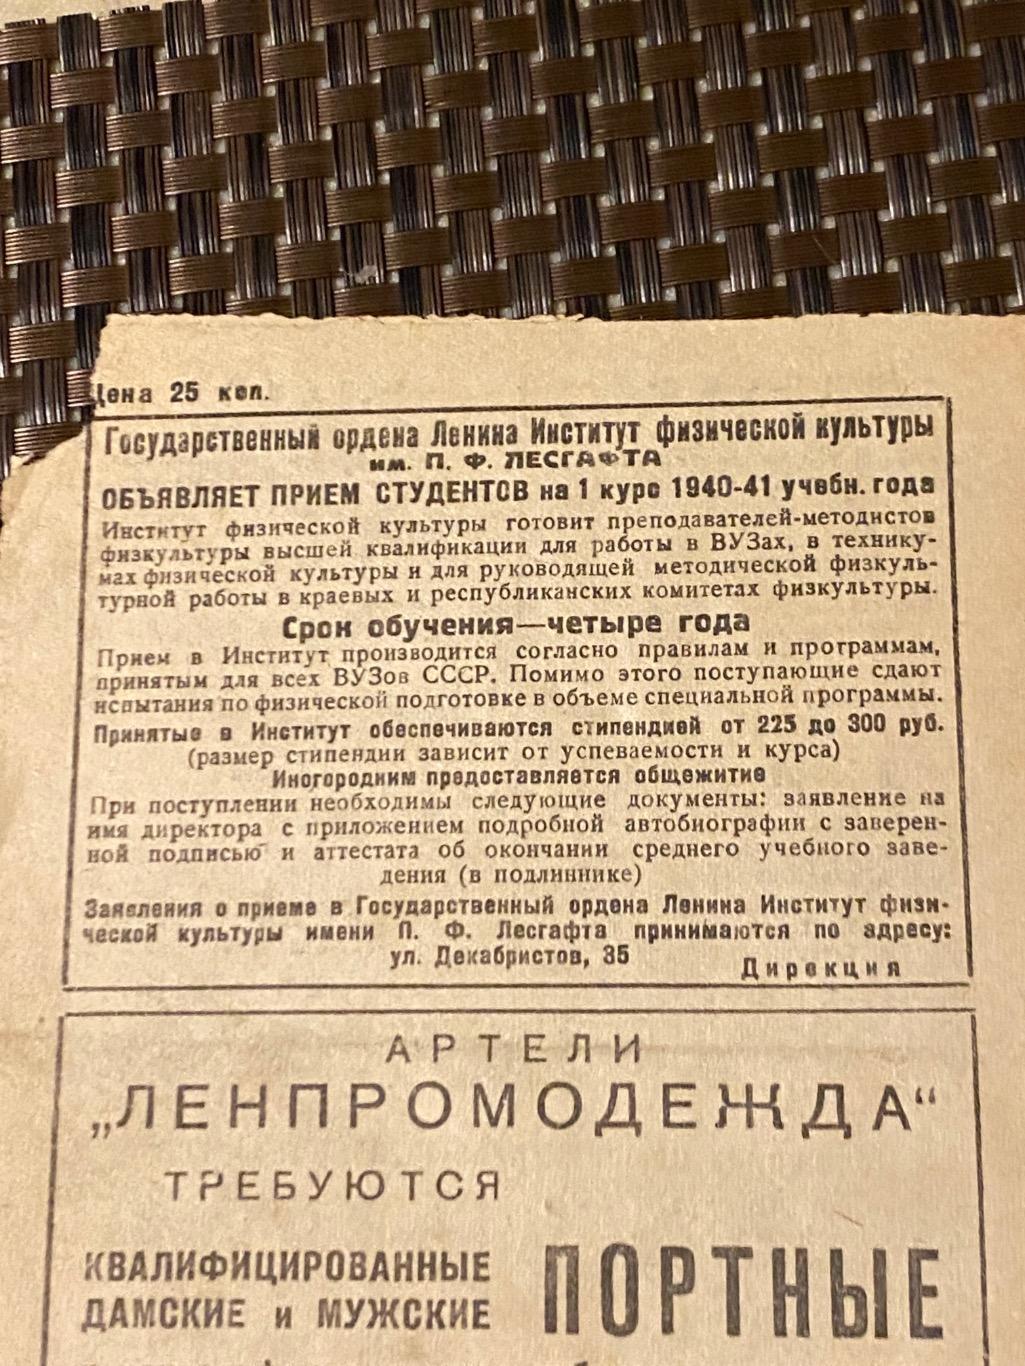 чемпионат СССР 1940 Динамо Ленинград - Зенит Ленинград 25.06.1940 1